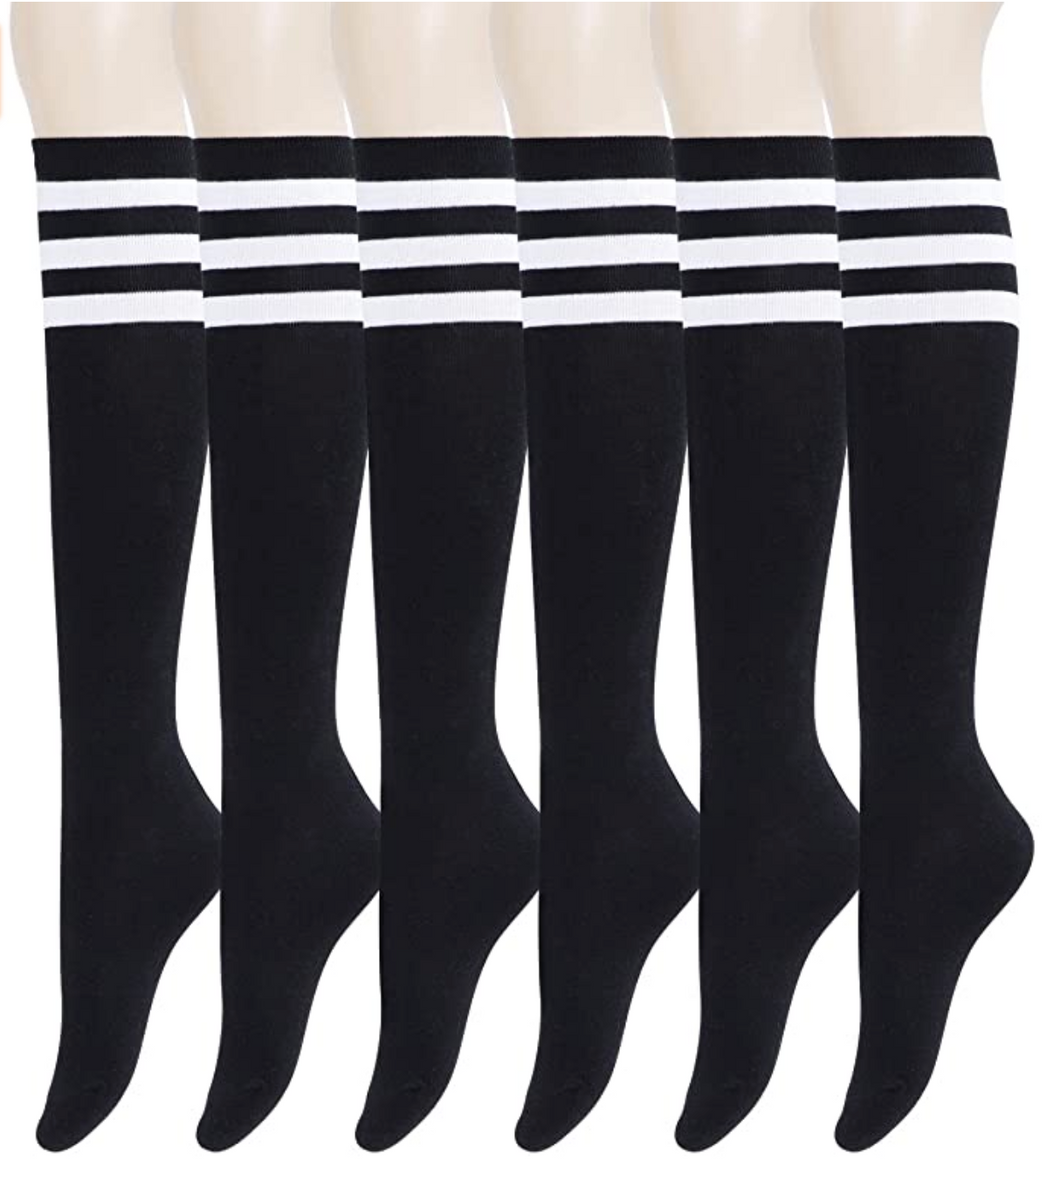 YEJIMONG Women's School Uniform / Team Sports / Tube Knee High Socks - Black & White Stripes (6 Pairs / Size 5-9 / Cotton)